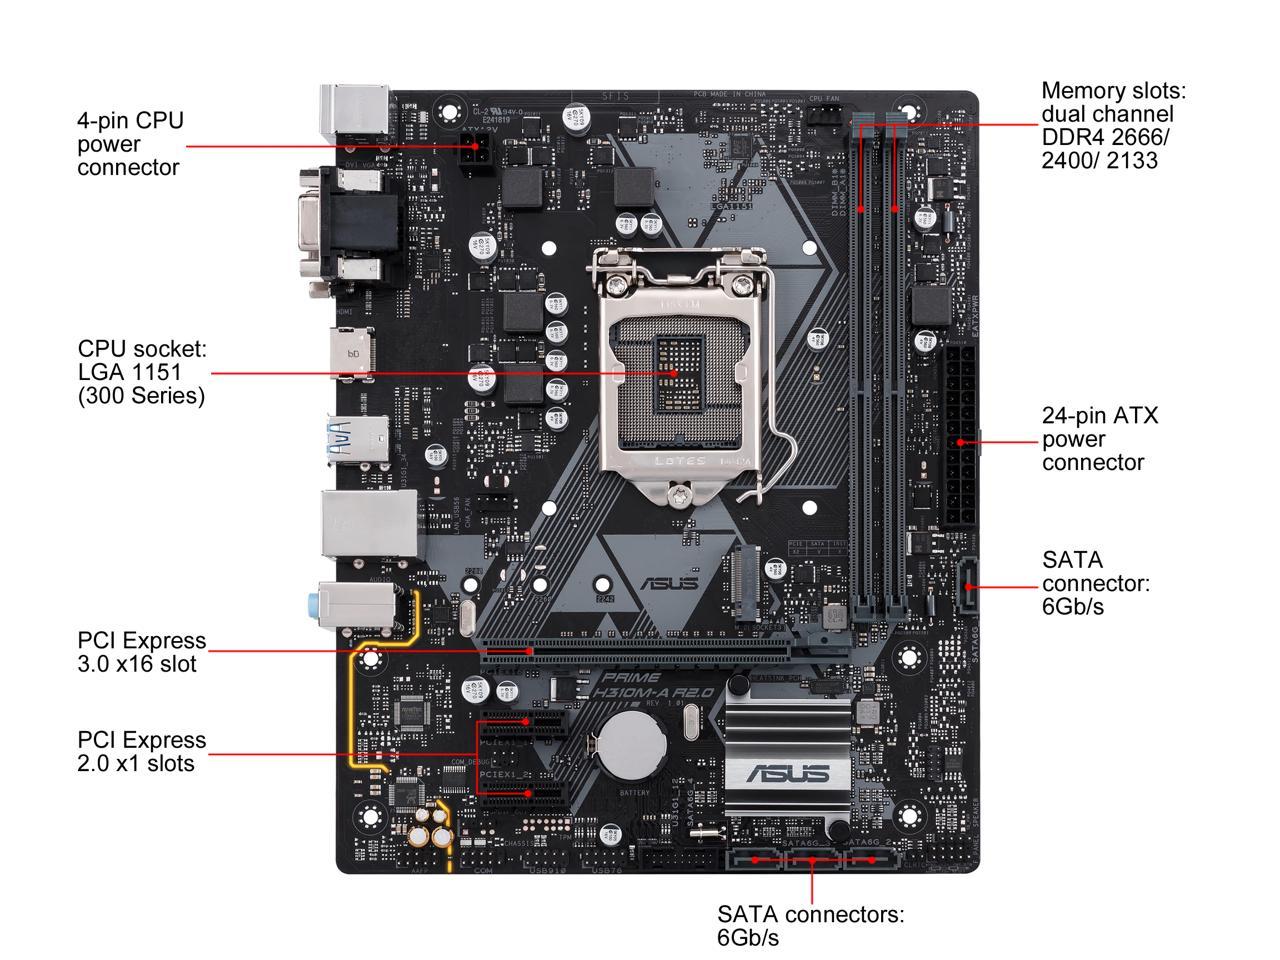 Asus Prime H310m A R2 0 Csm Desktop Motherboard Intel Chipset Socket H4 Lga 1151 Newegg Com